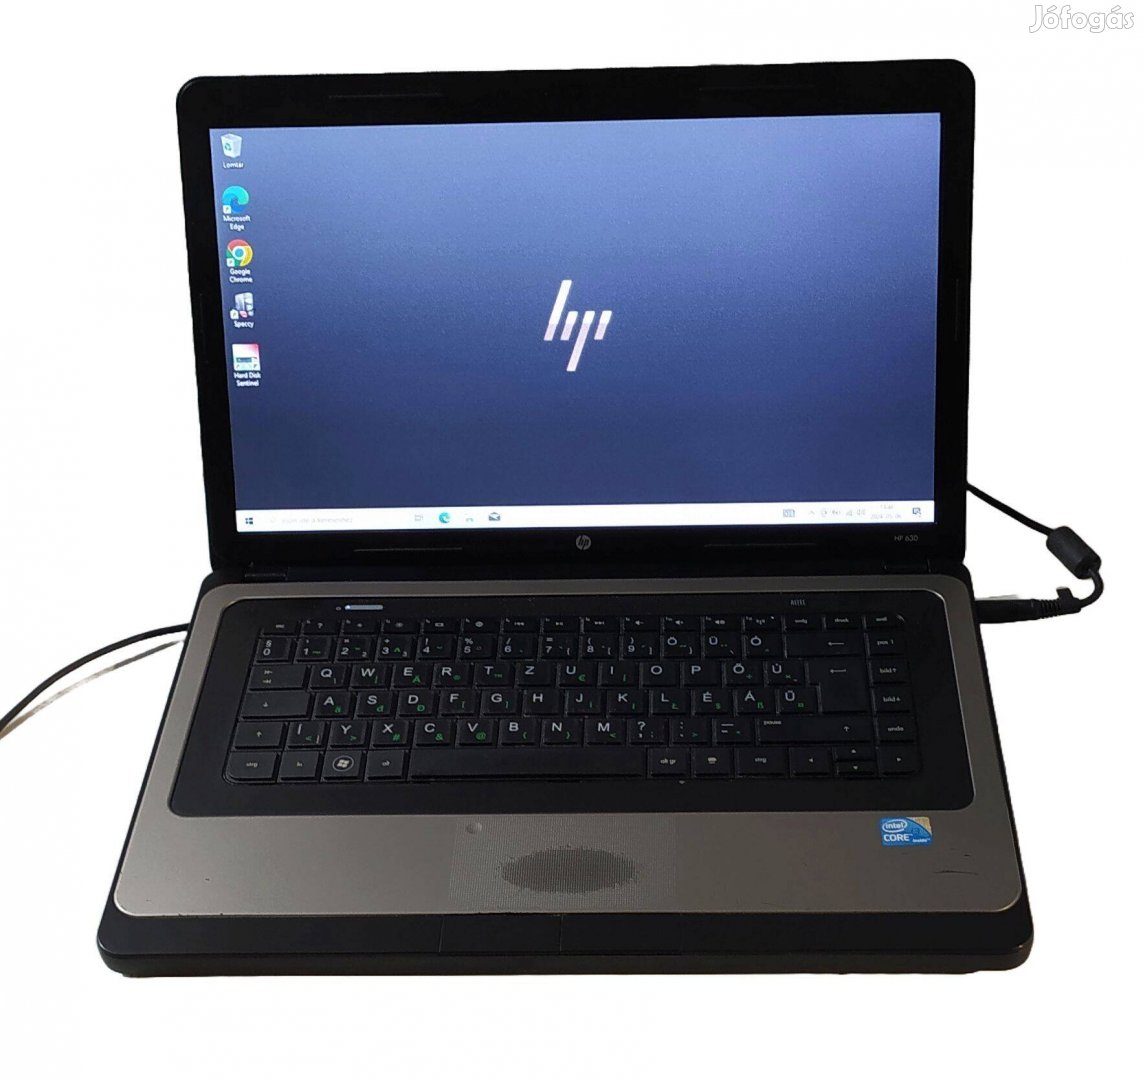 HP 630 laptop / notebook / 15.6" / i3-370M / 4GB DDR3 / 120GB SSD / Wi